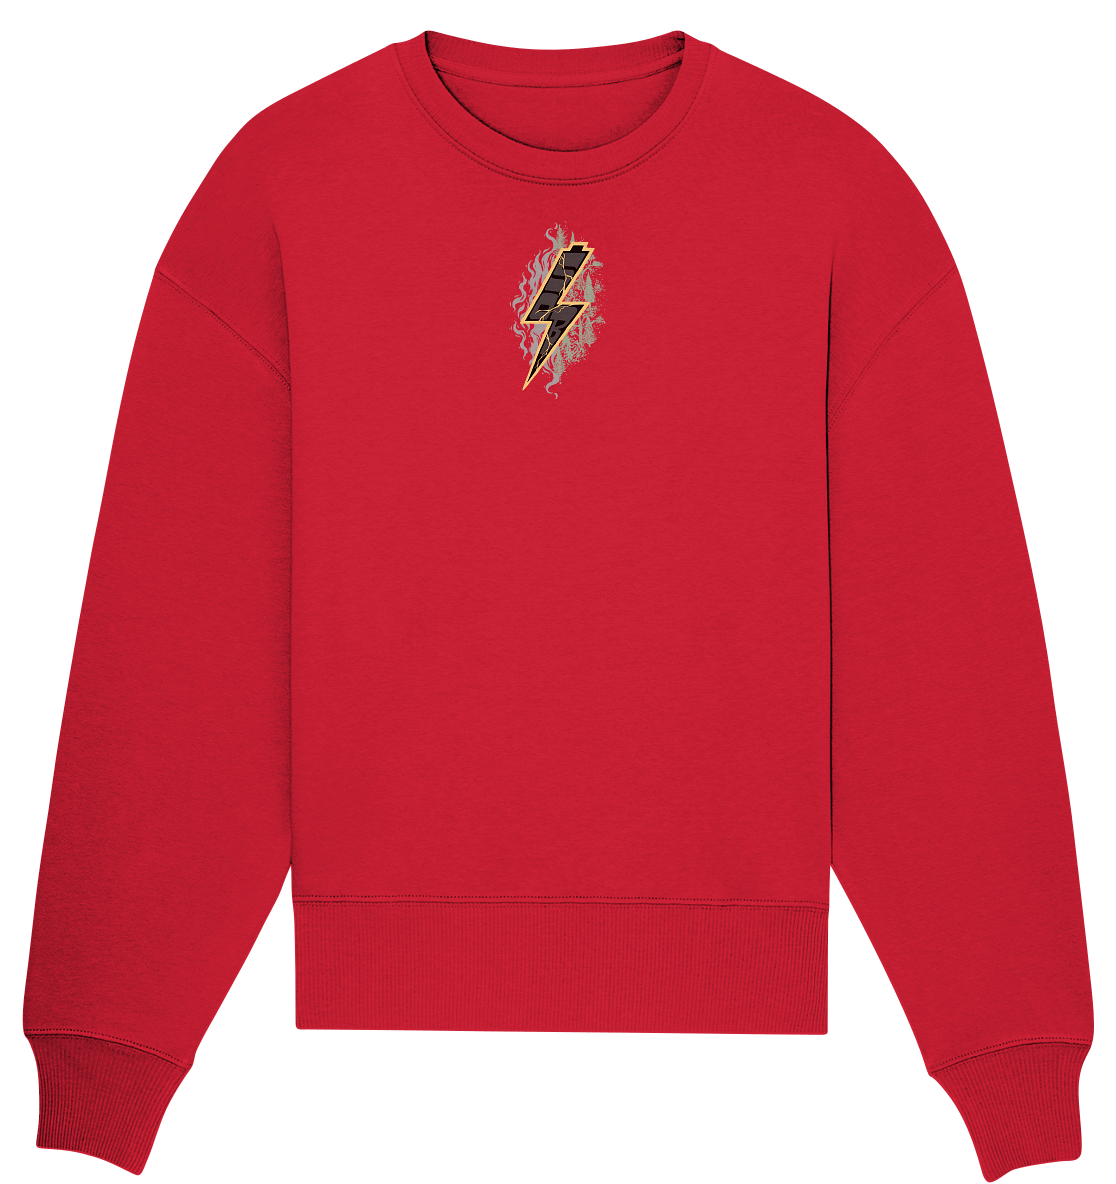 Sons of Battery® - E-MTB Brand & Community Sweatshirts Red / S SoB - Shred or Alive - Organic Oversize Sweatshirt E-Bike-Community